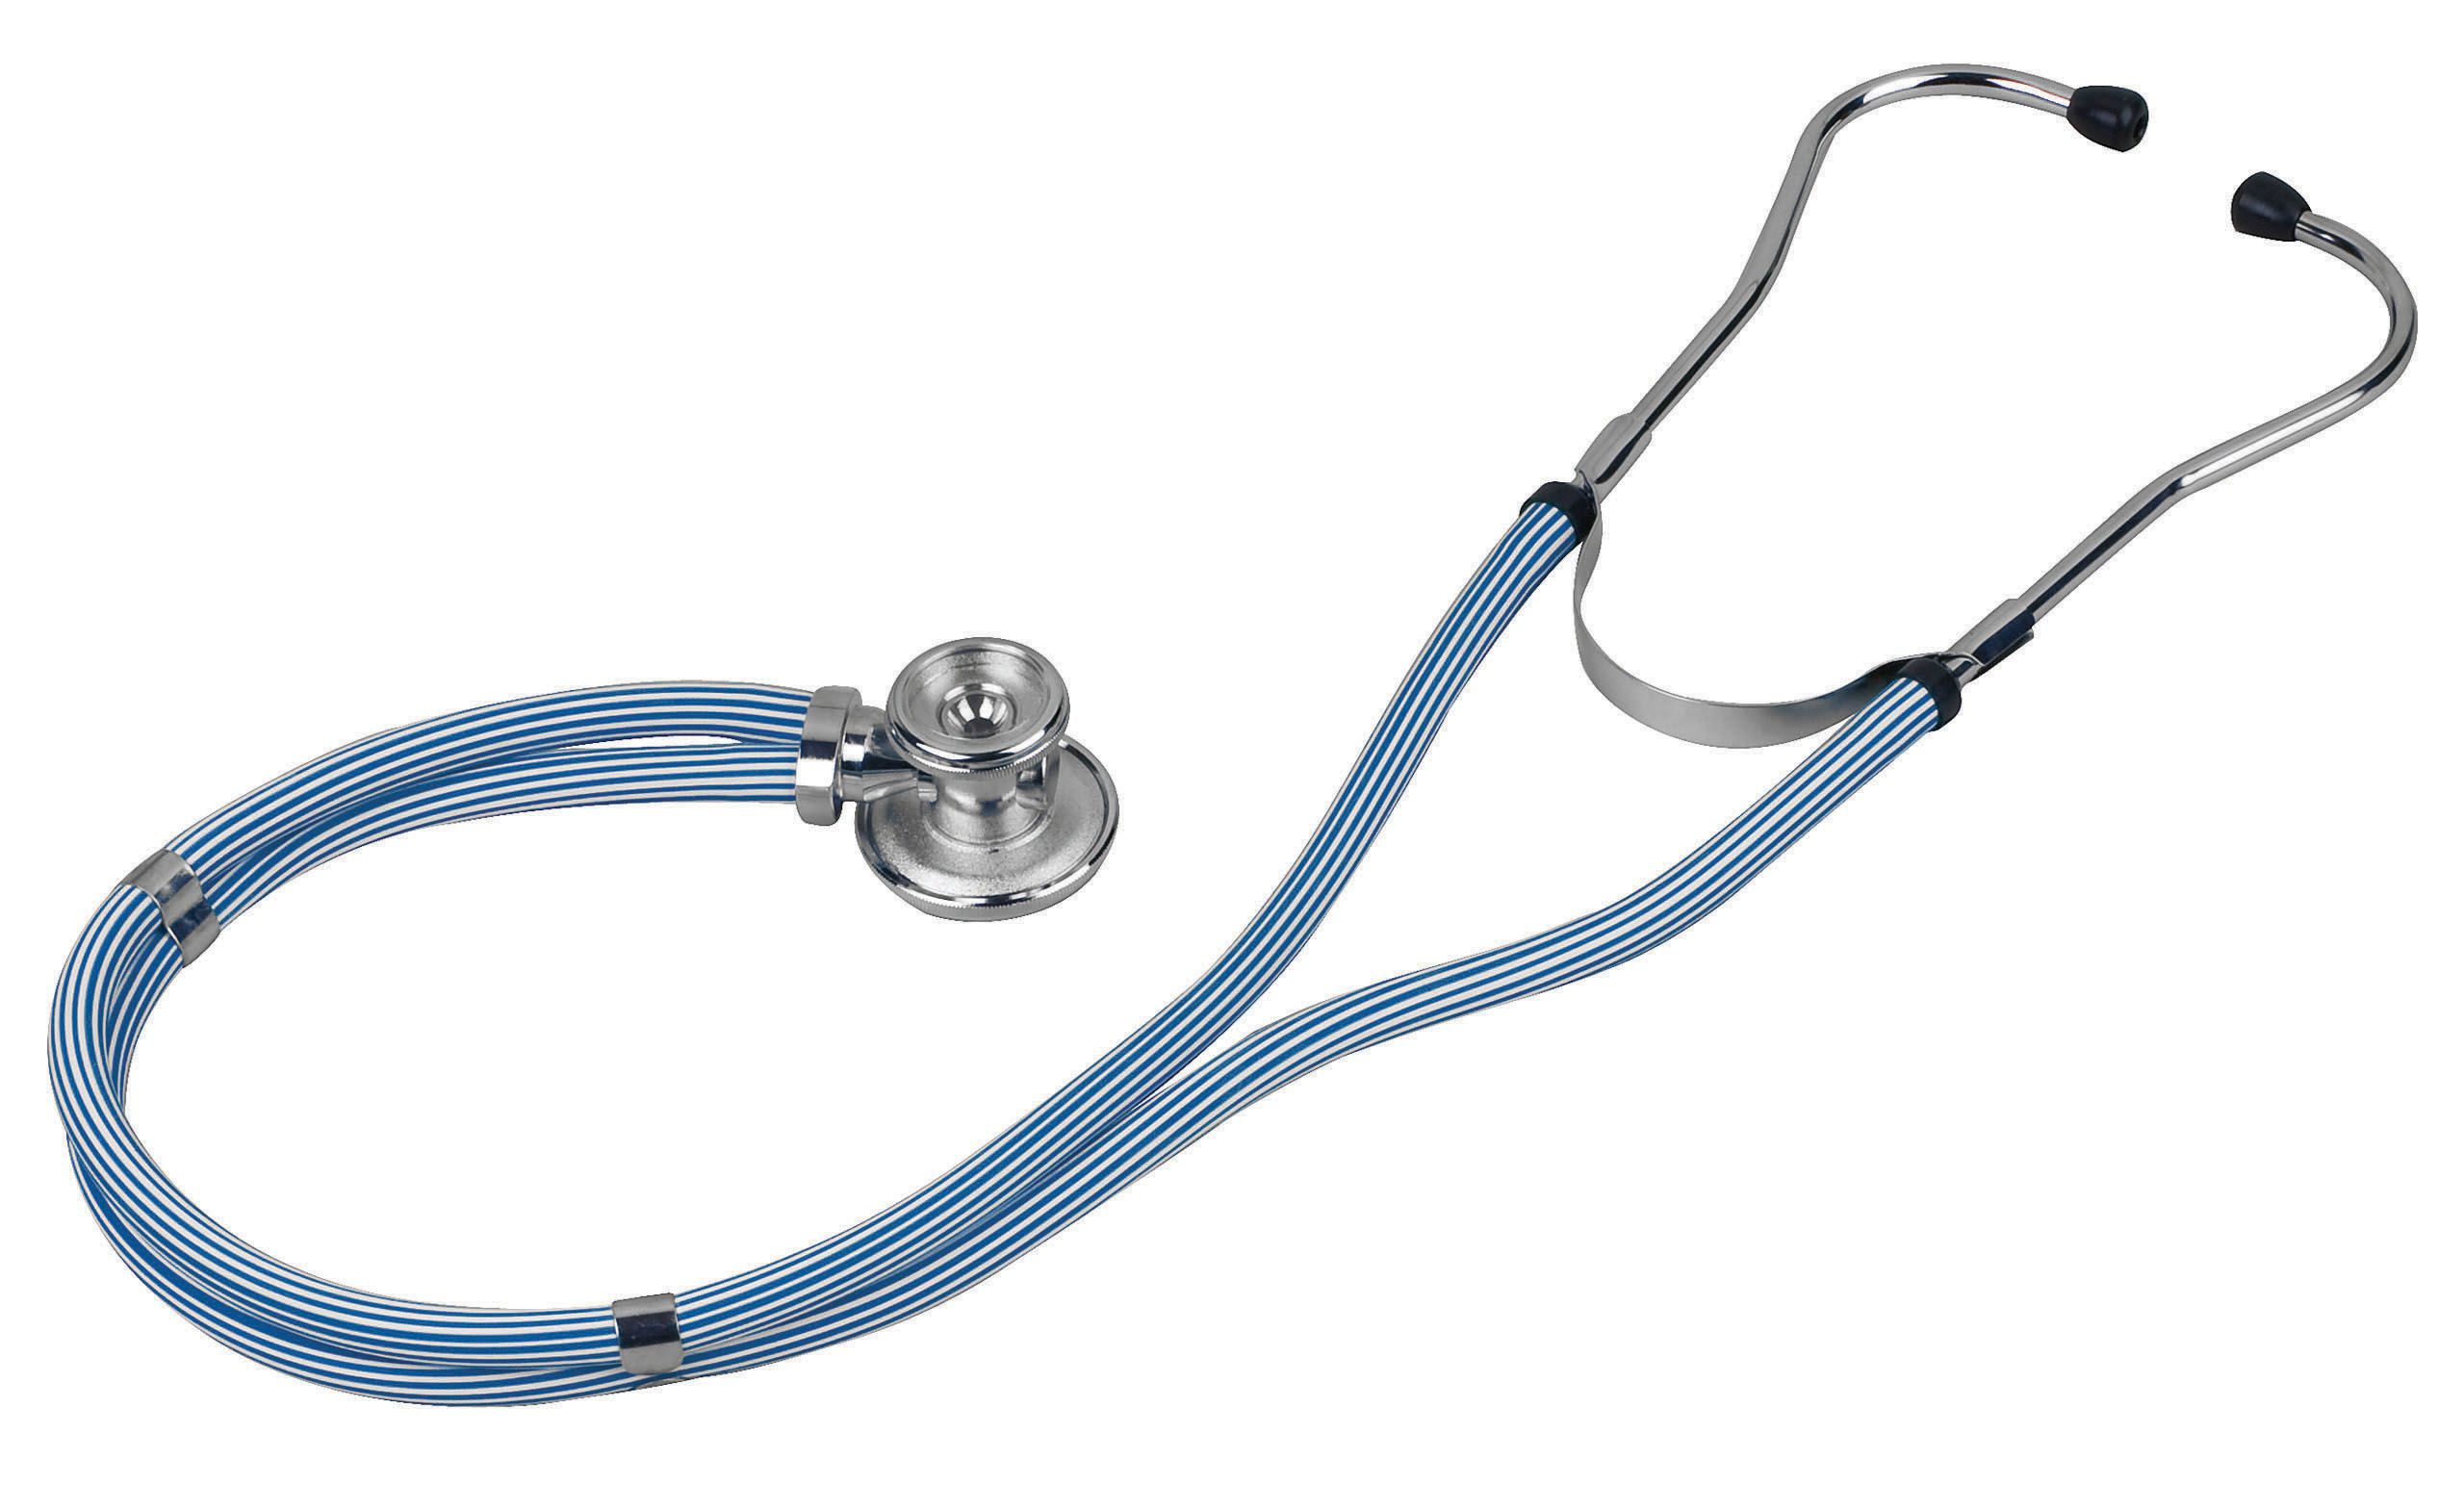 sterling-series-sprague-rappaport-type-stethoscope-royal-blue-striped-slider-pack-05-11203-veridian-2.jpg